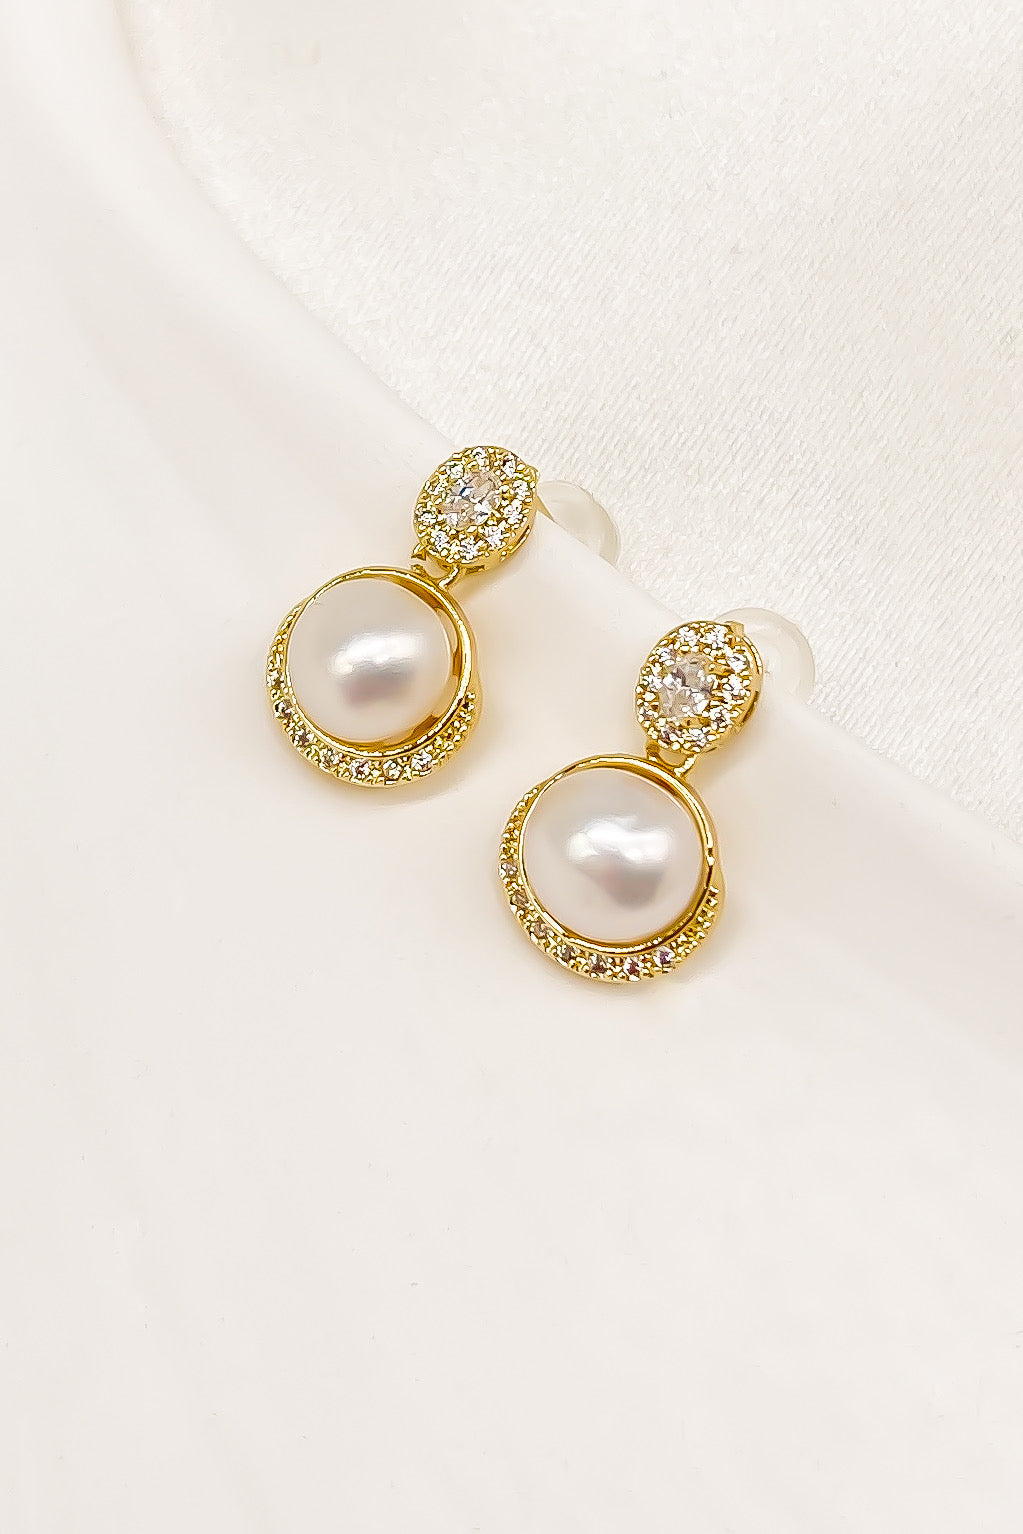 SKYE Shop Chic Modern Elegant Classy Women Jewelry French Parisian Minimalist Ayda Freshwater Pearl Drop Earrings 5